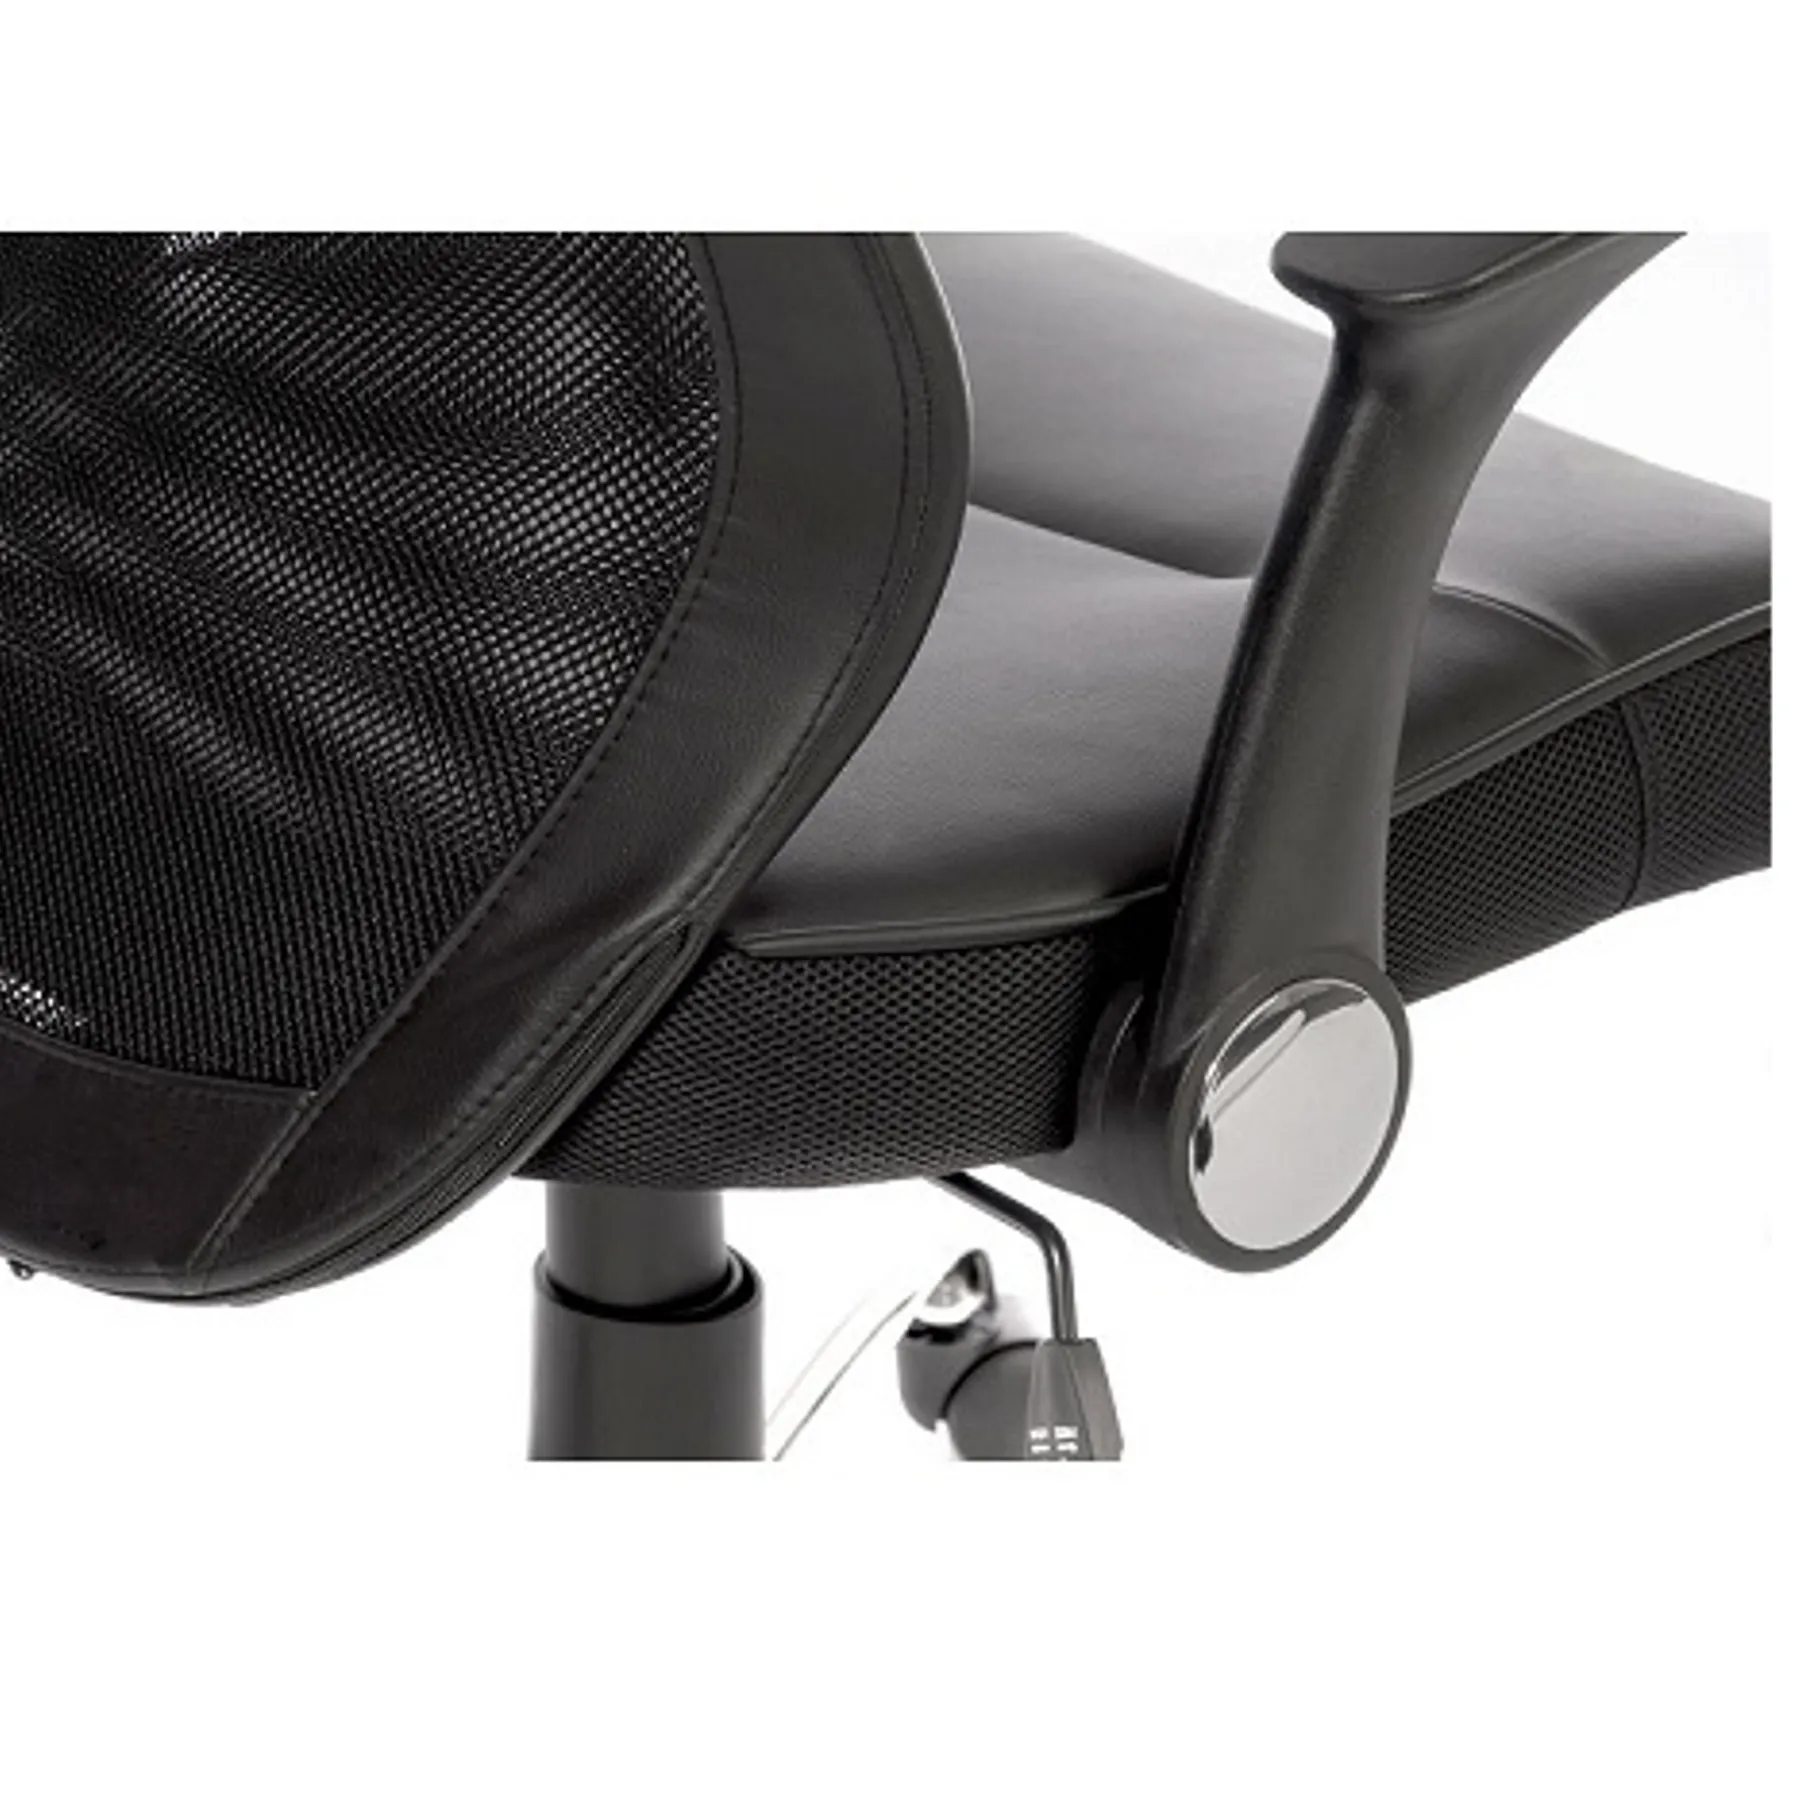 LOF Direct Teknik Curve Mesh Back Chair 6912 Details